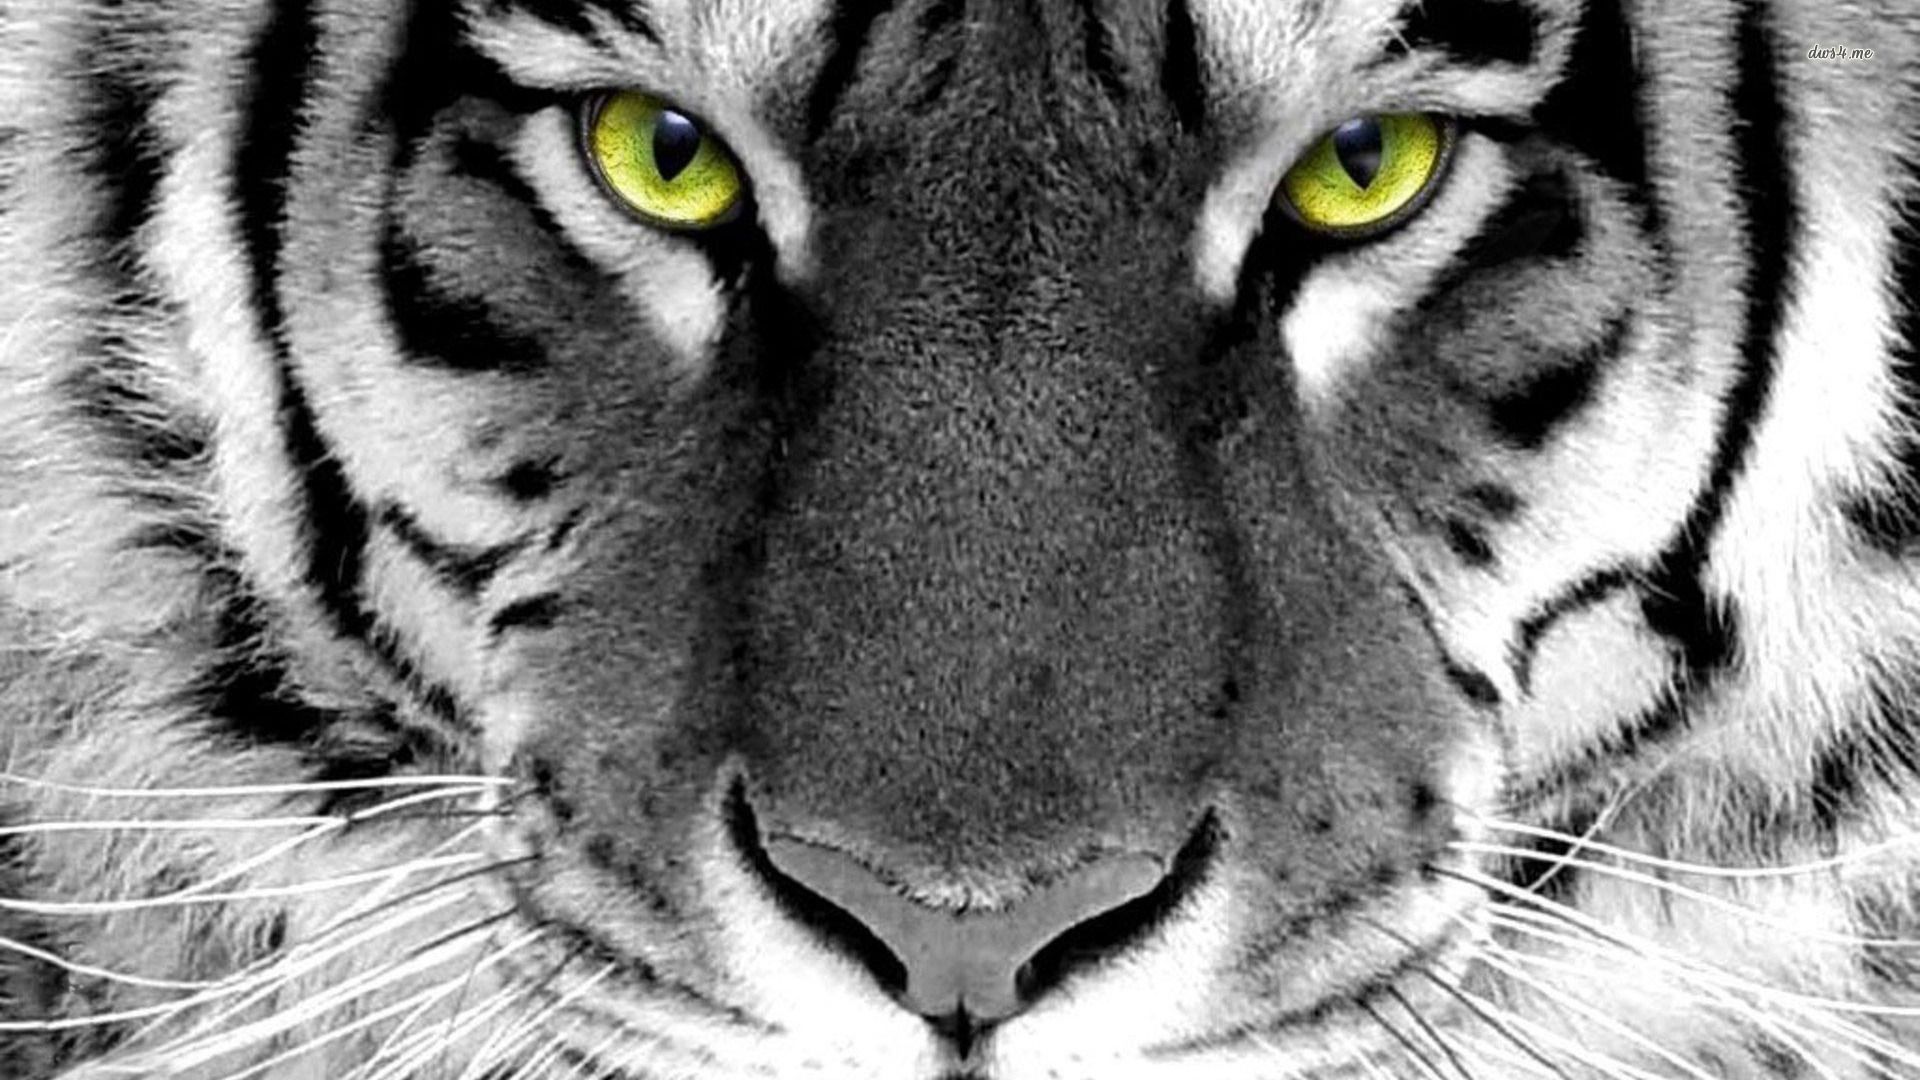 Tiger Yellow Eyes Close Up High Definition Wallpaper. Tiger